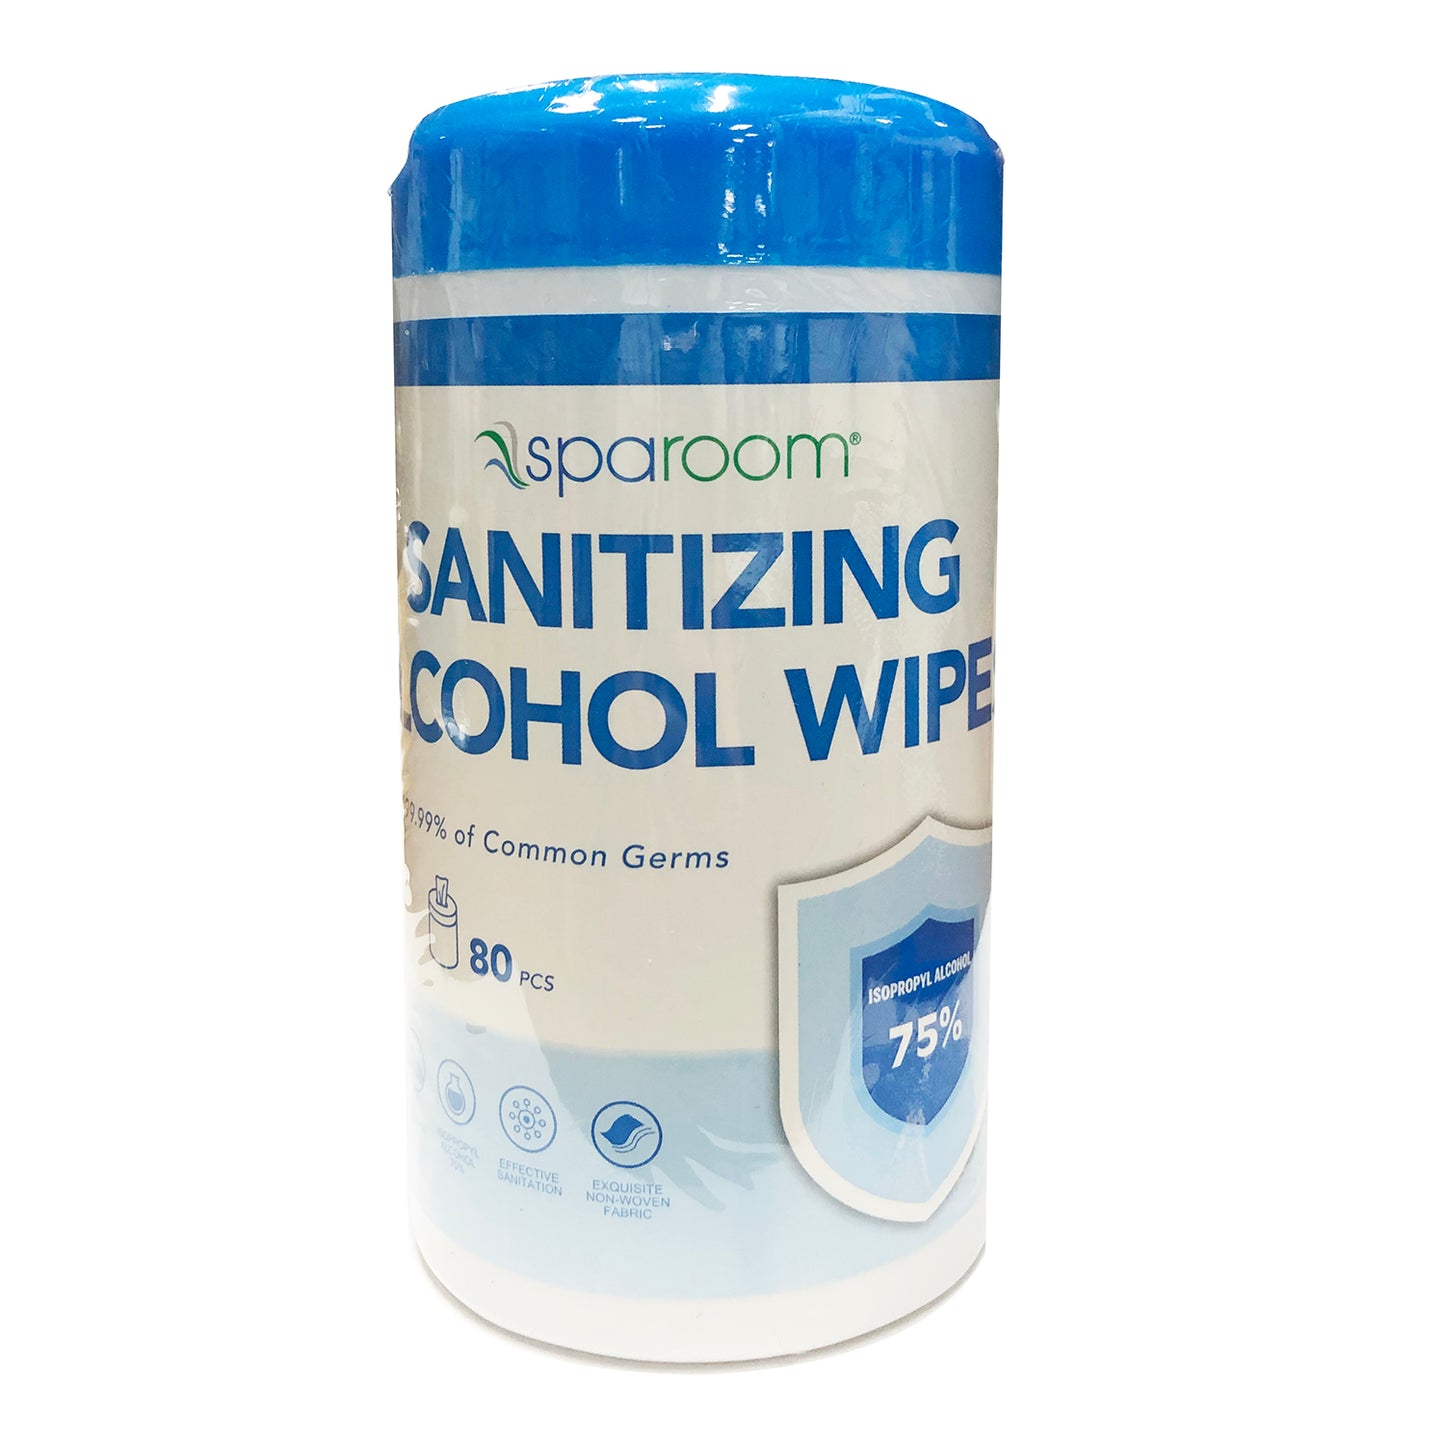 Sanitizing Alcohol Wipes 80 pcs by Sparoom